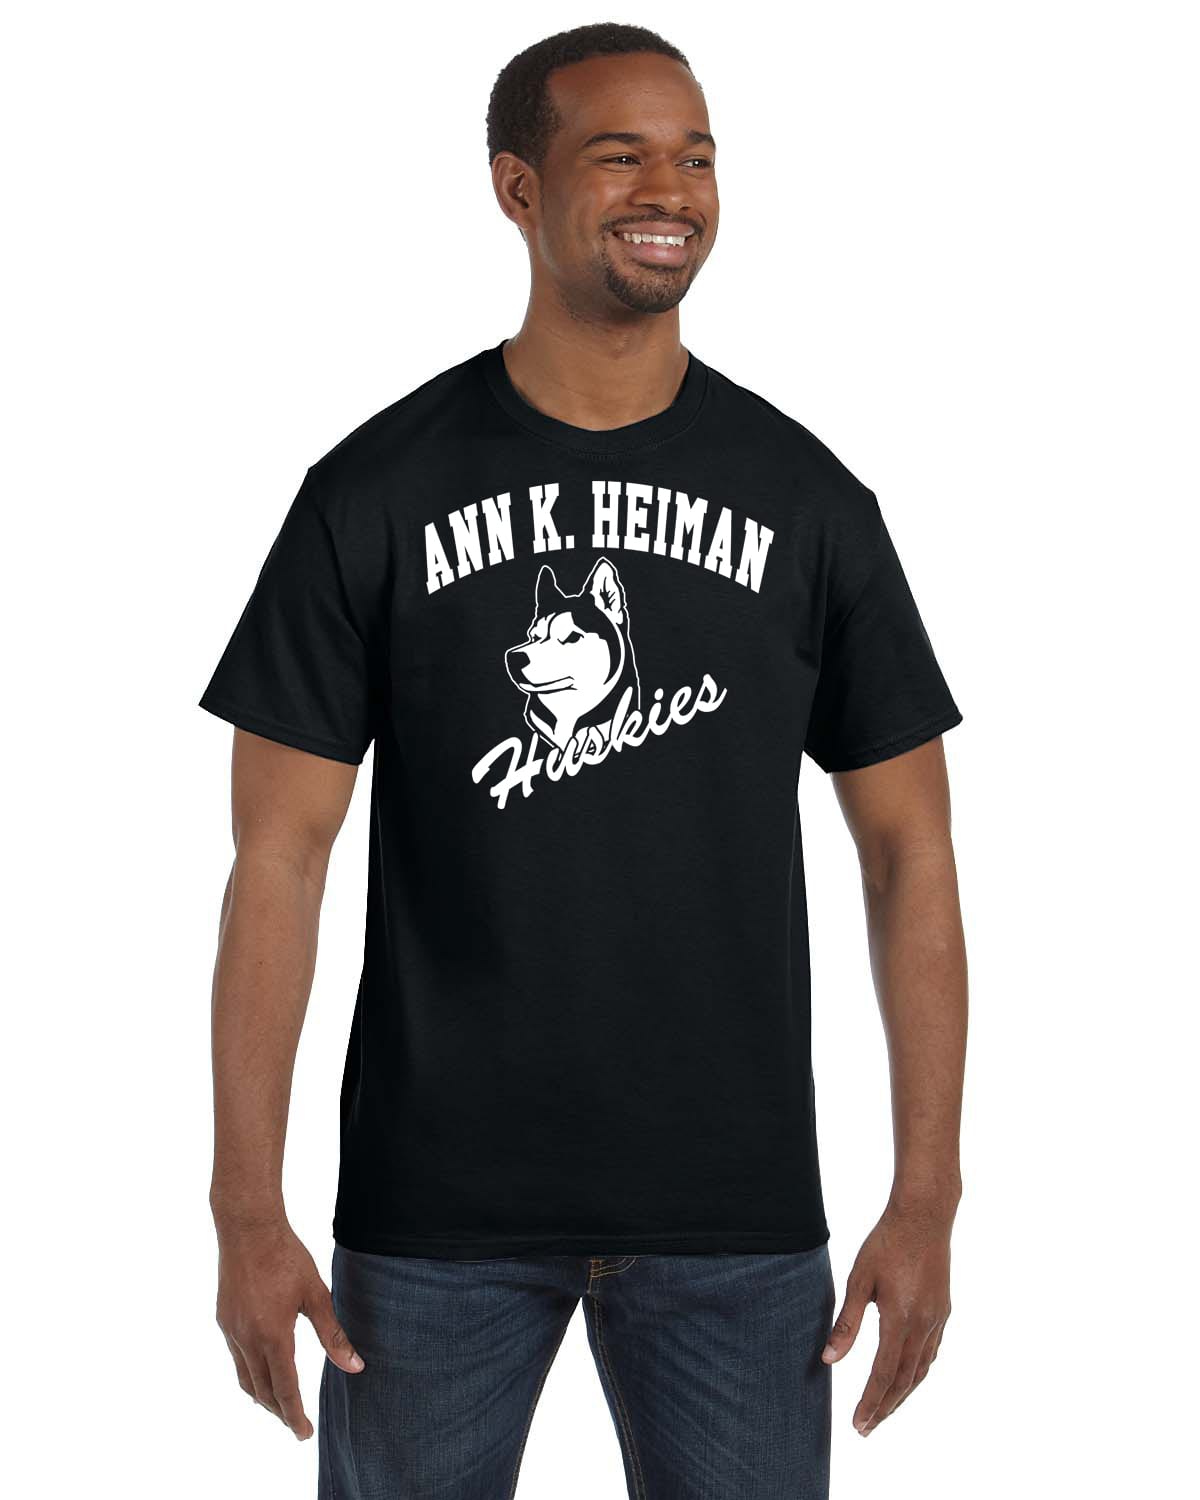 Heiman Elementary School Adult Black Short Sleeve Cotton T-shirt